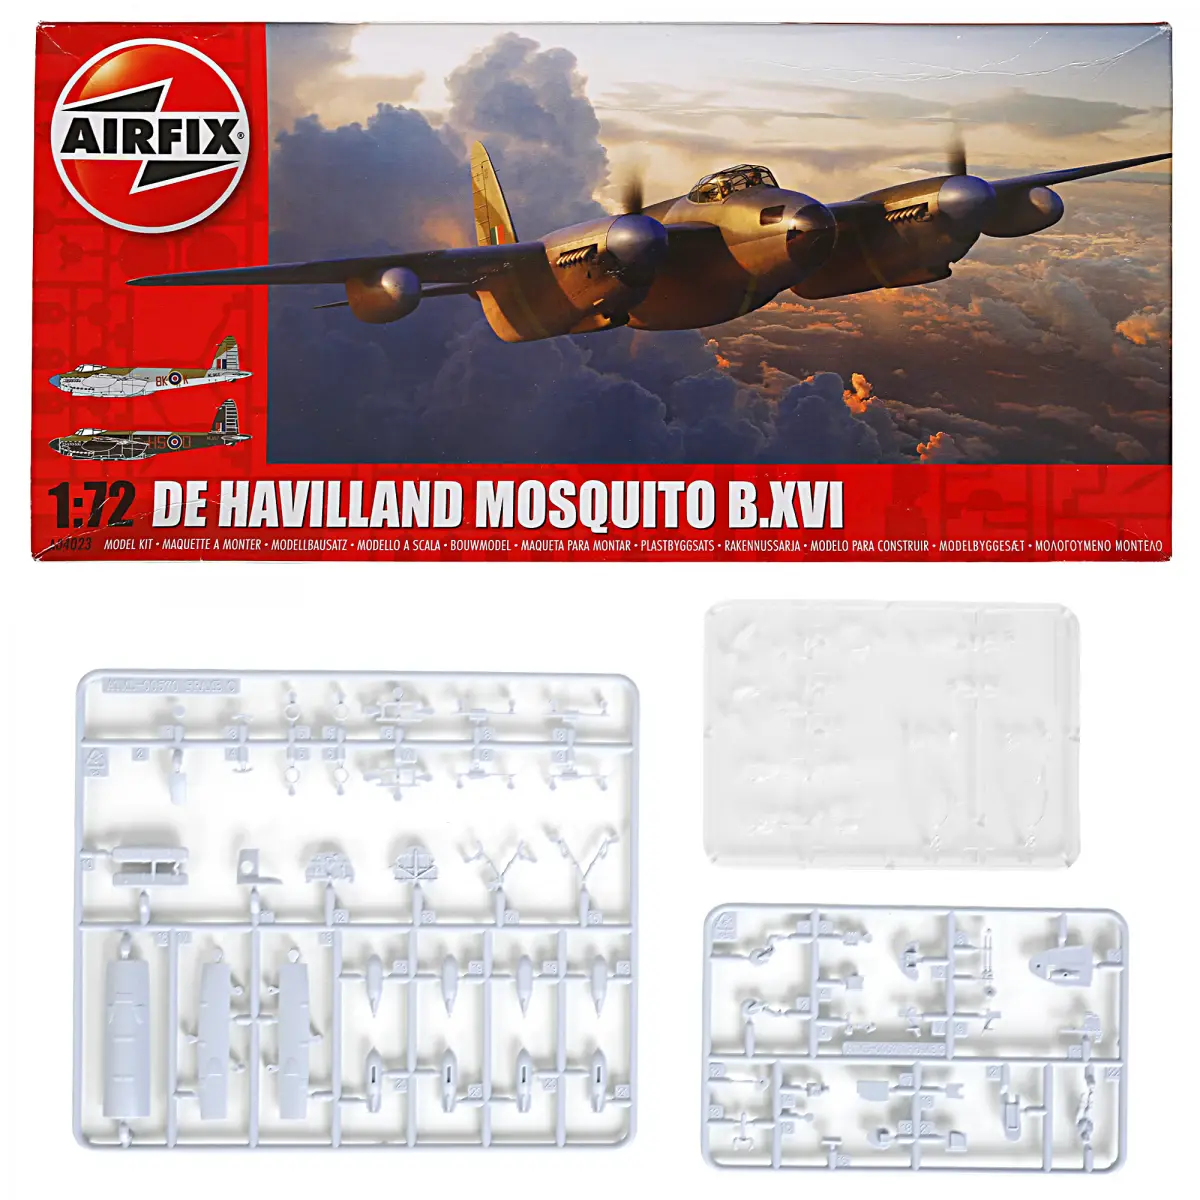 Airfix A04023 de Havilland Mosquito B.XVI 1:72 Military Plastic Model Gift Set, Kids for 8Y+, Multicolour